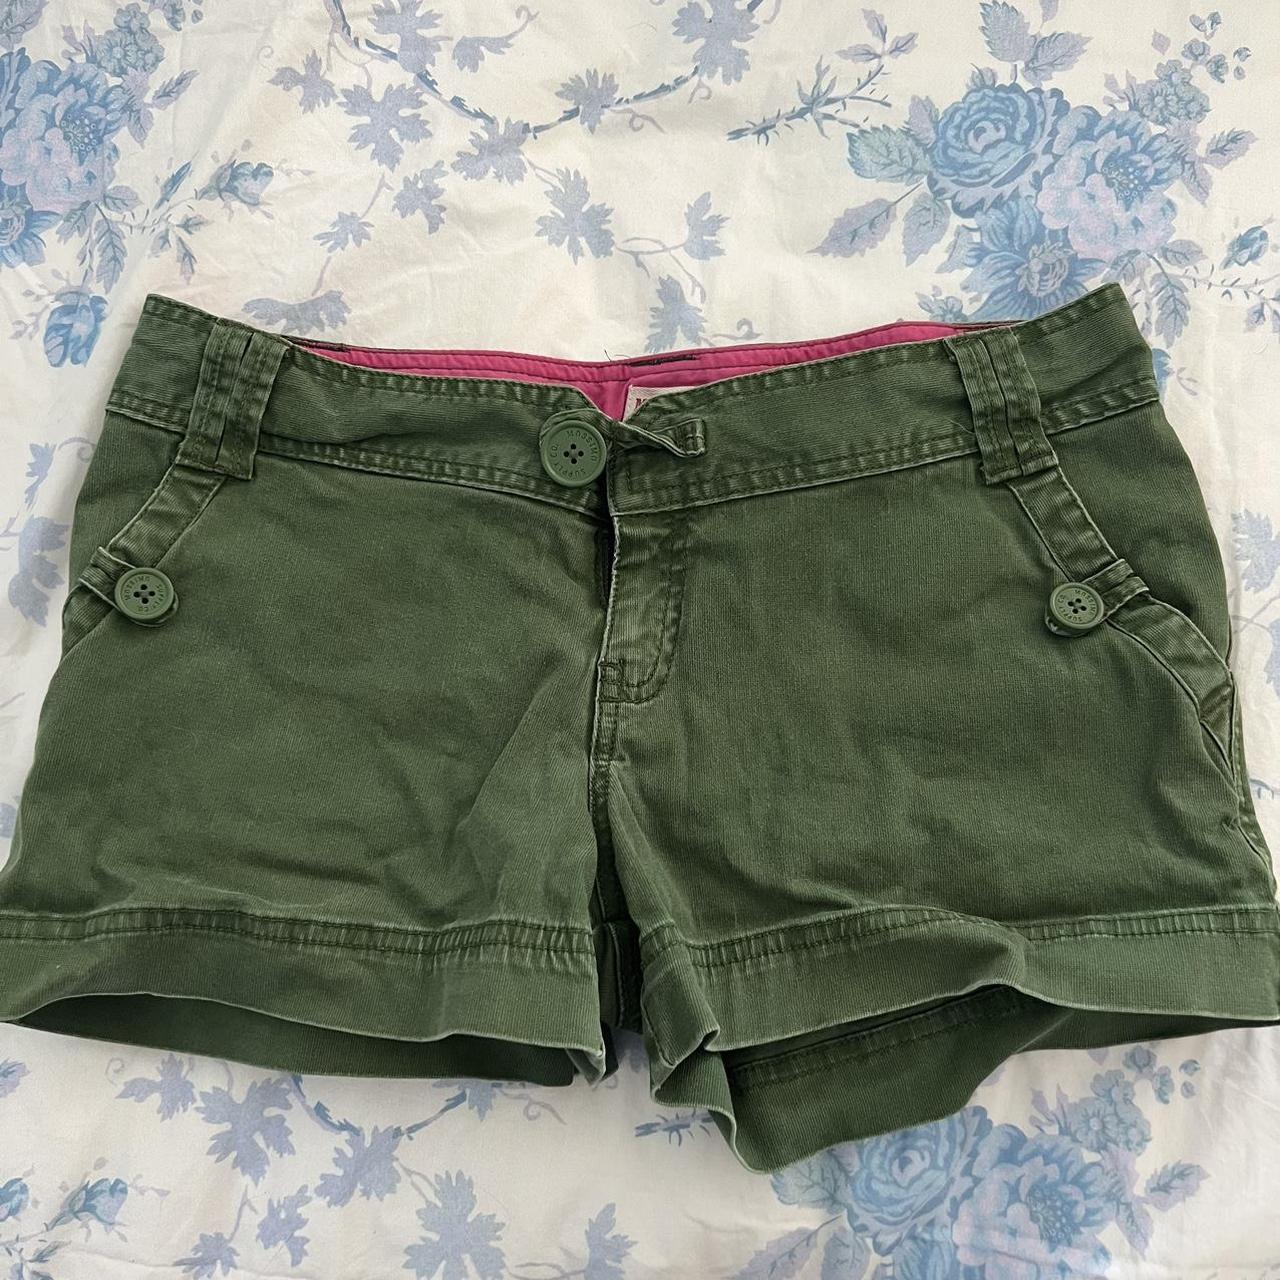 Mossimo Lana Cargo Pants